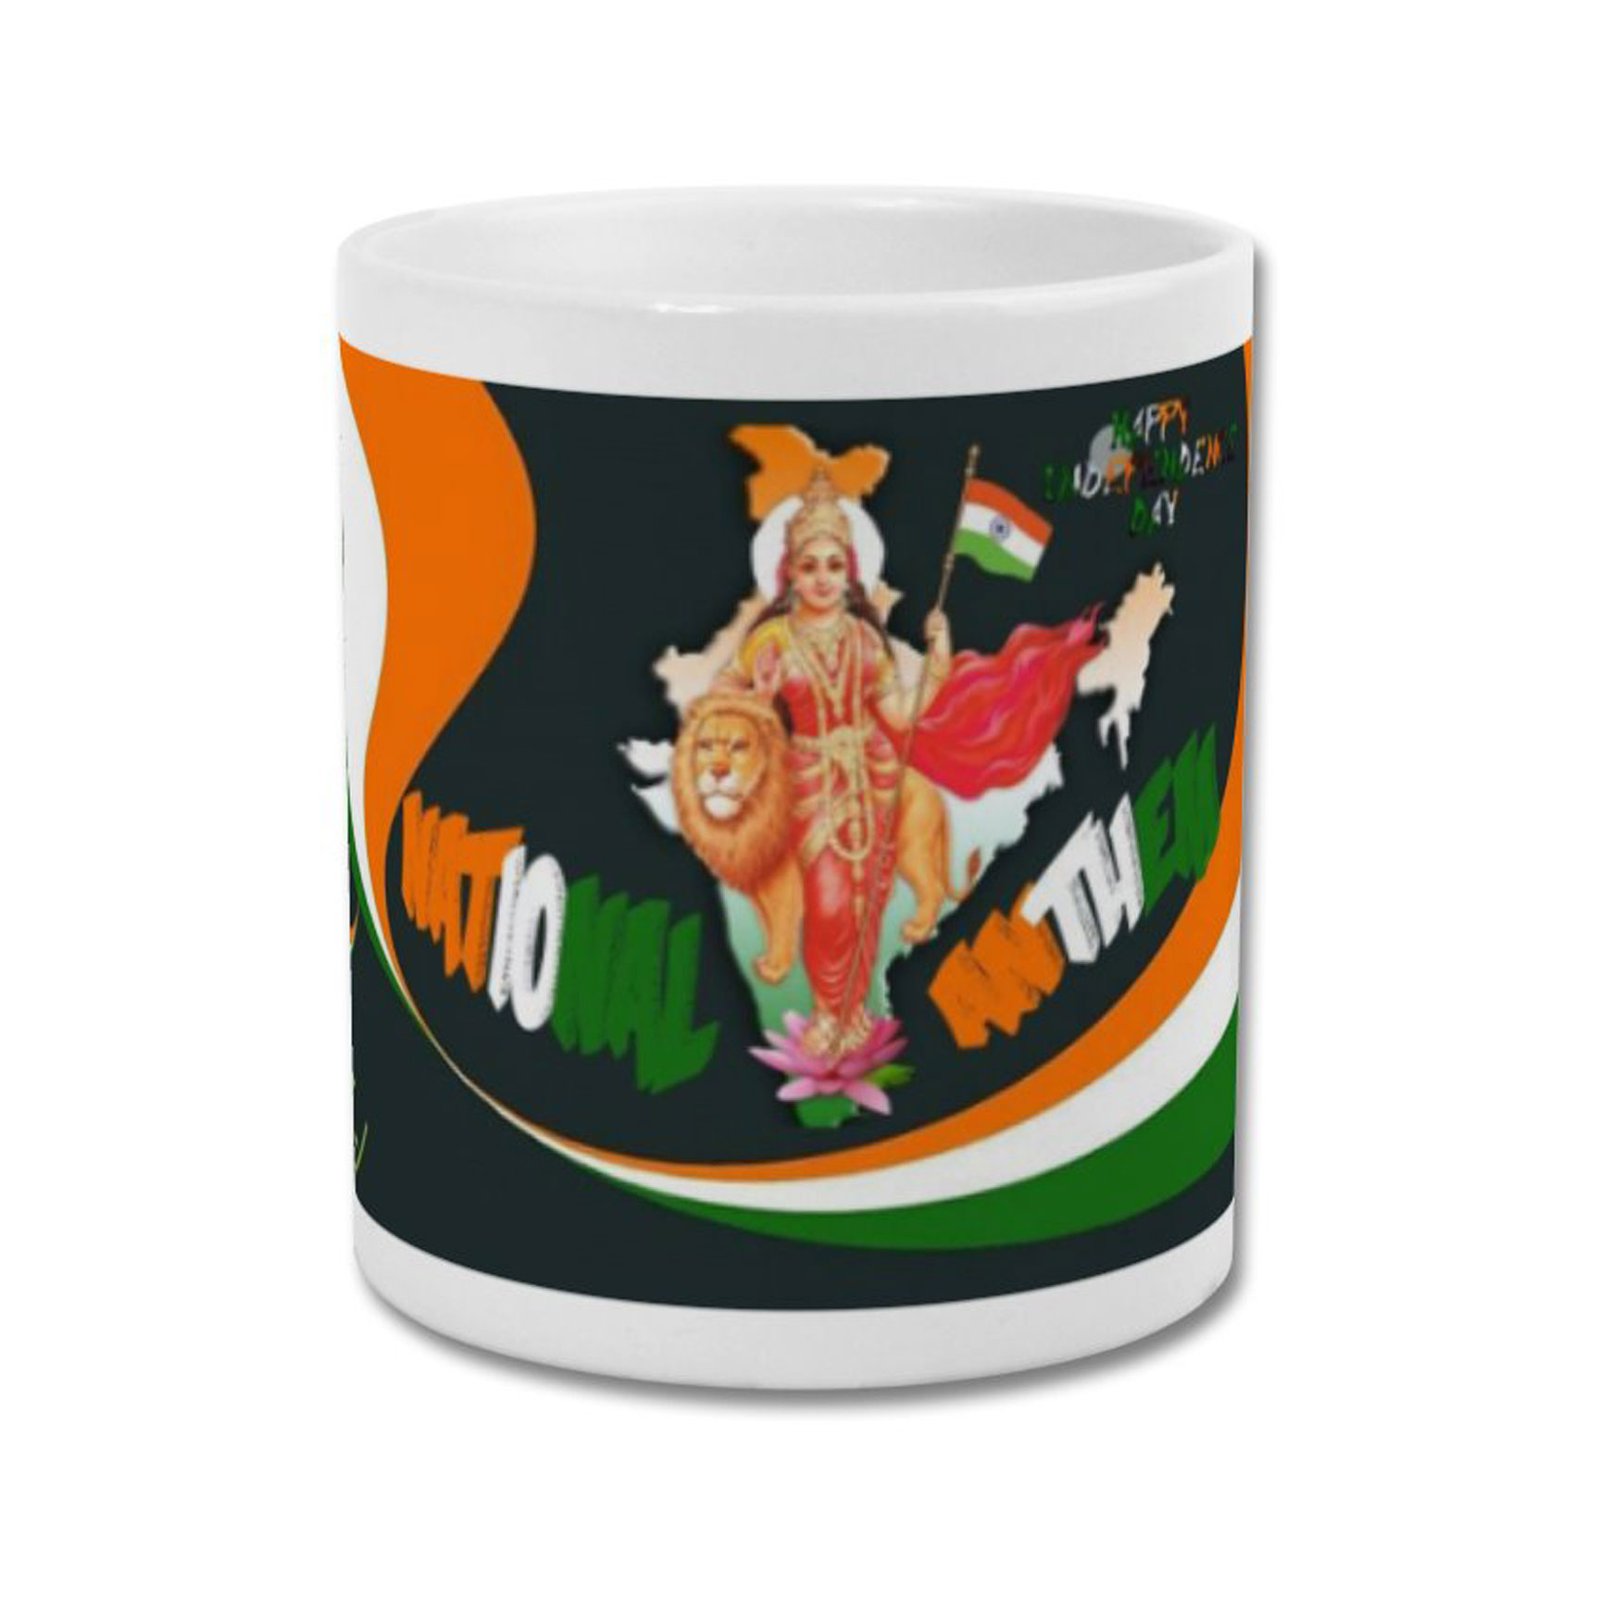 Fantaboy National Anthem India printed Coffee Mug